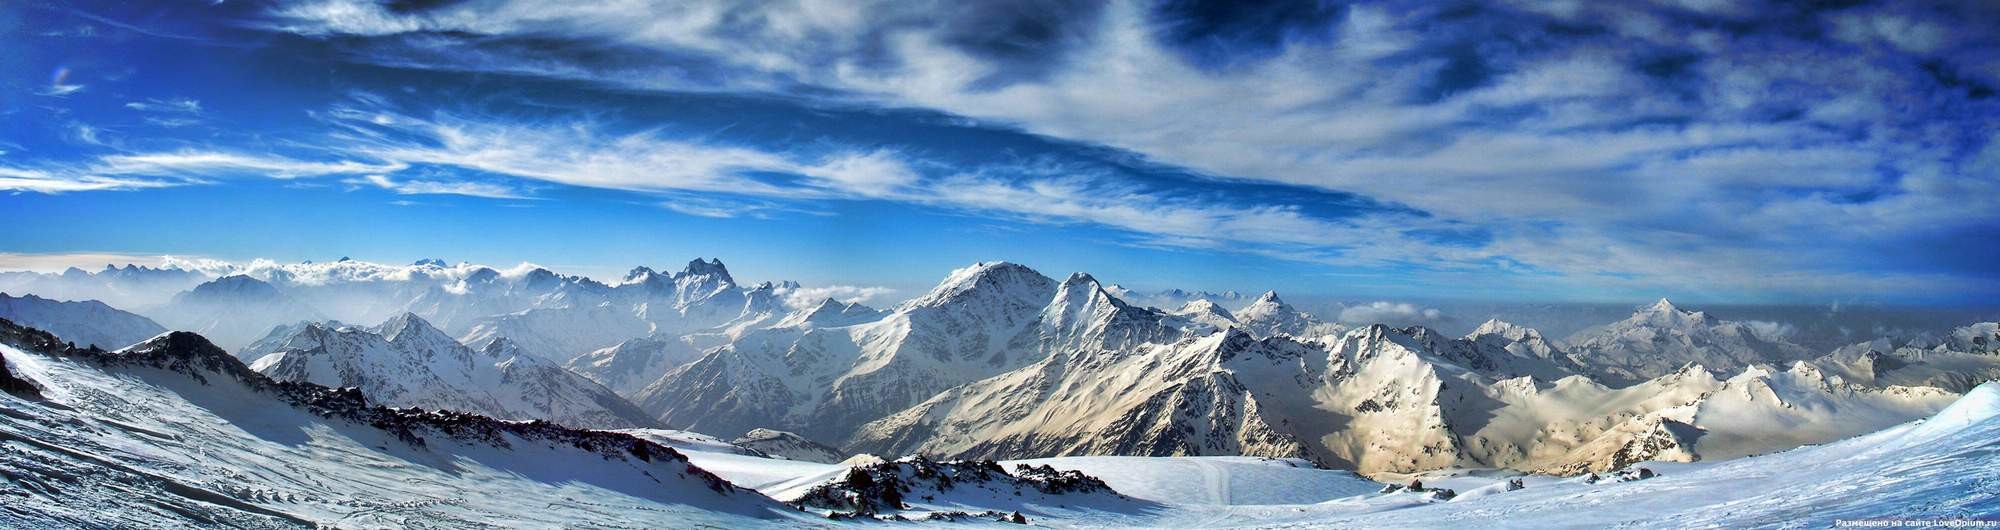 Горы кавказский хребет панорама